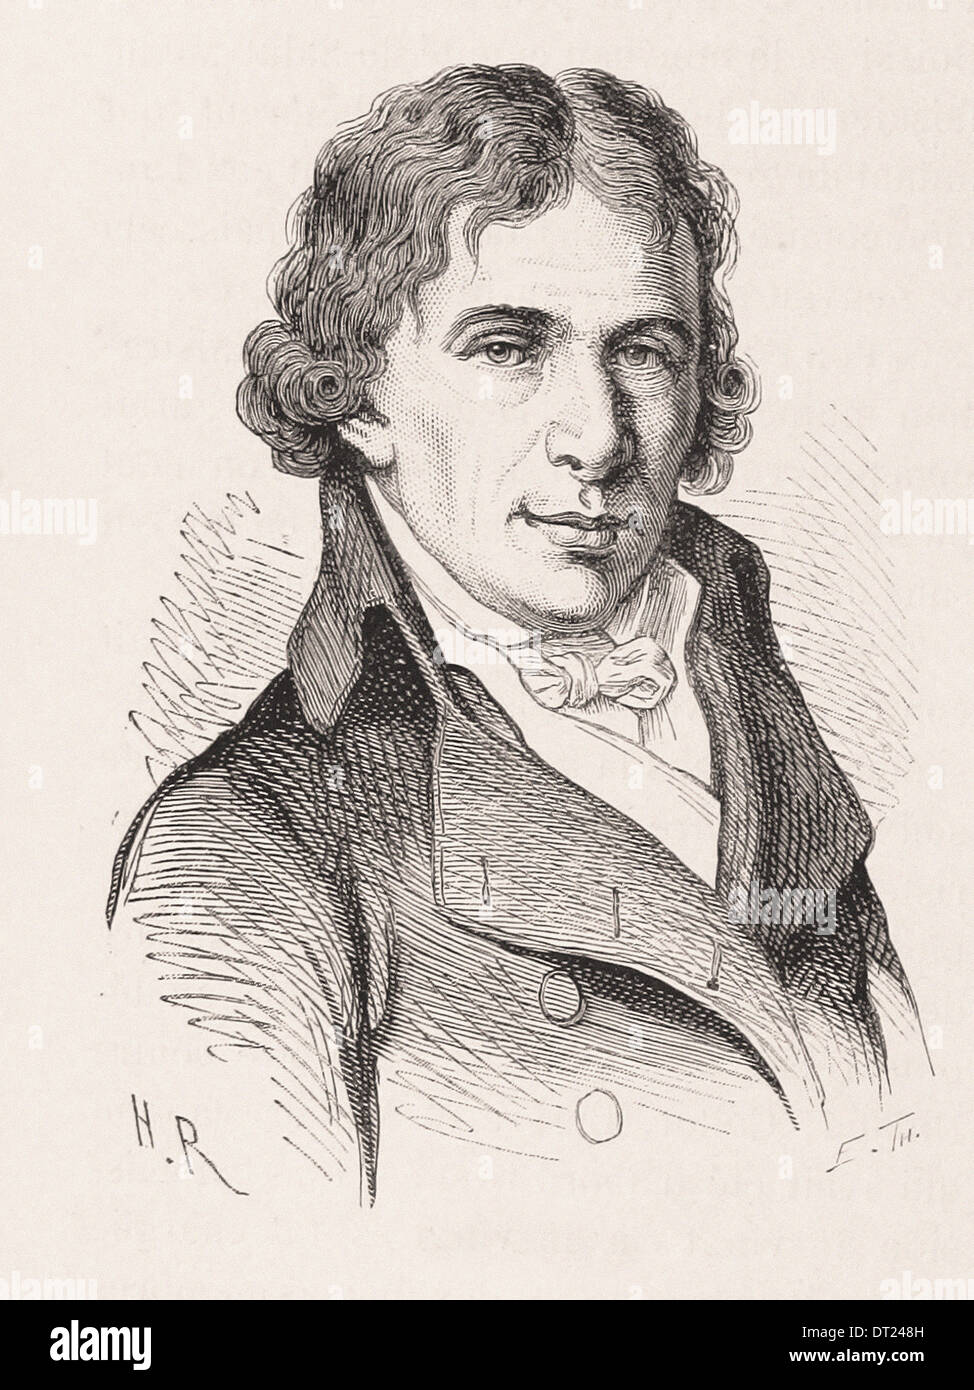 Porträt des Abbé Sicard - Gravur XIX Jahrhundert Französisch Stockfoto